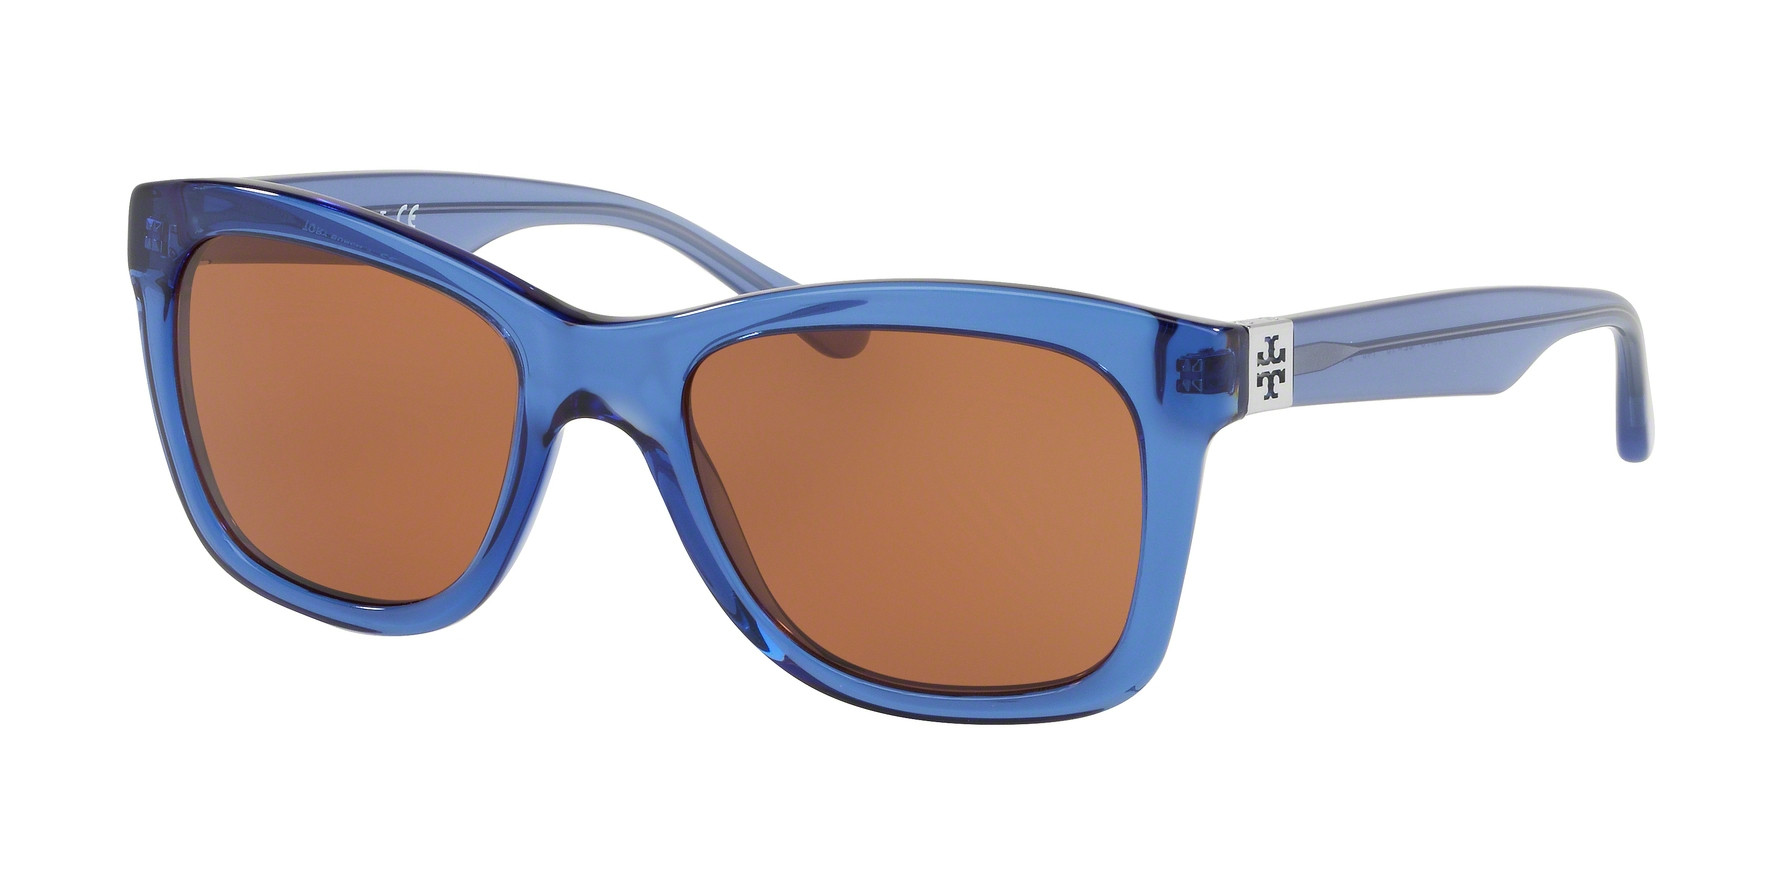 Tory Burch TY7118 Sunglasses - Tory Burch Authorized Retailer ...